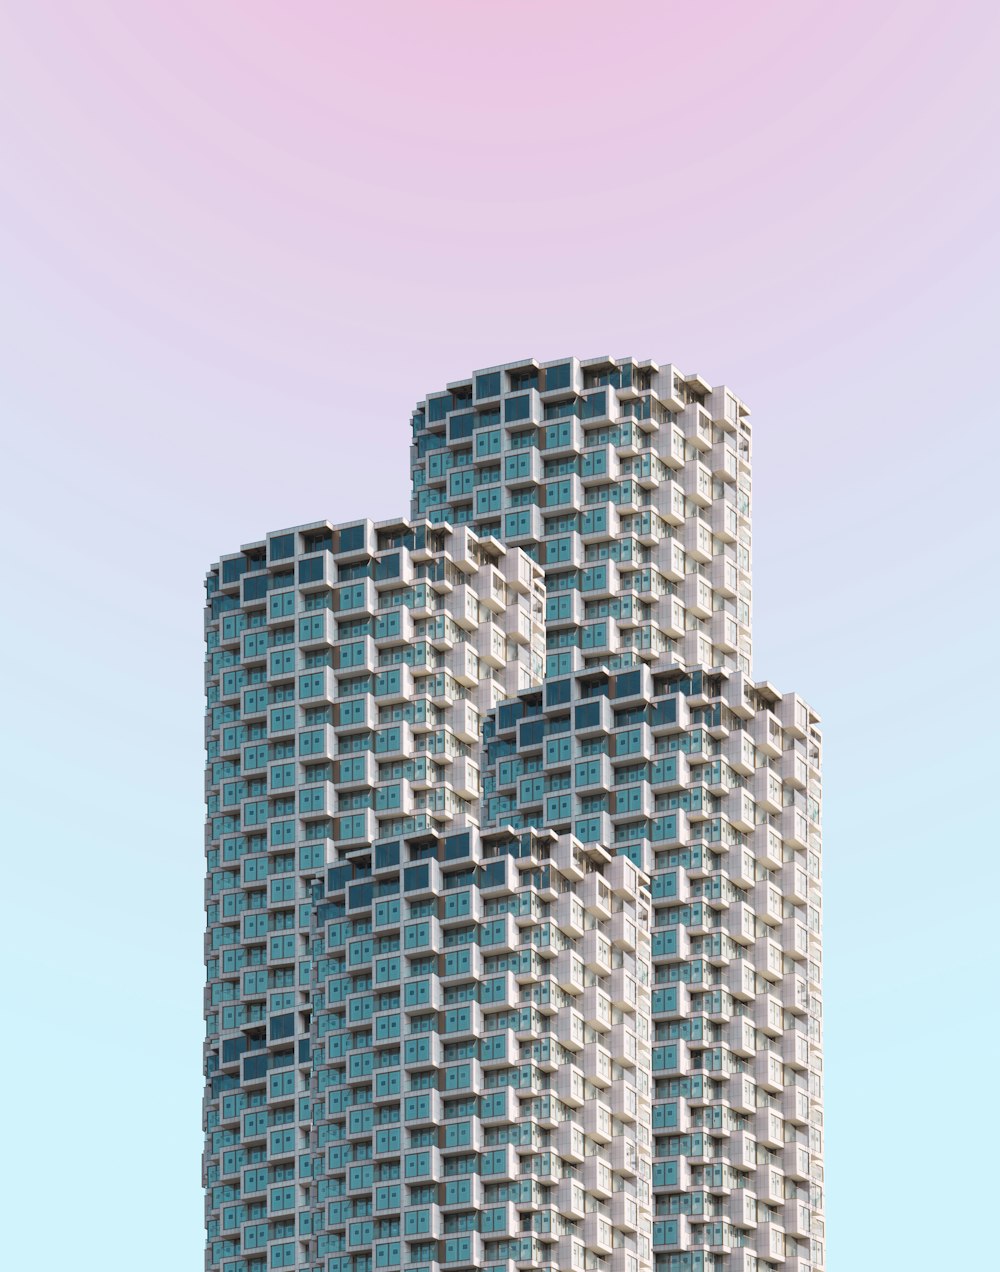 gray concrete building under clear blue sky